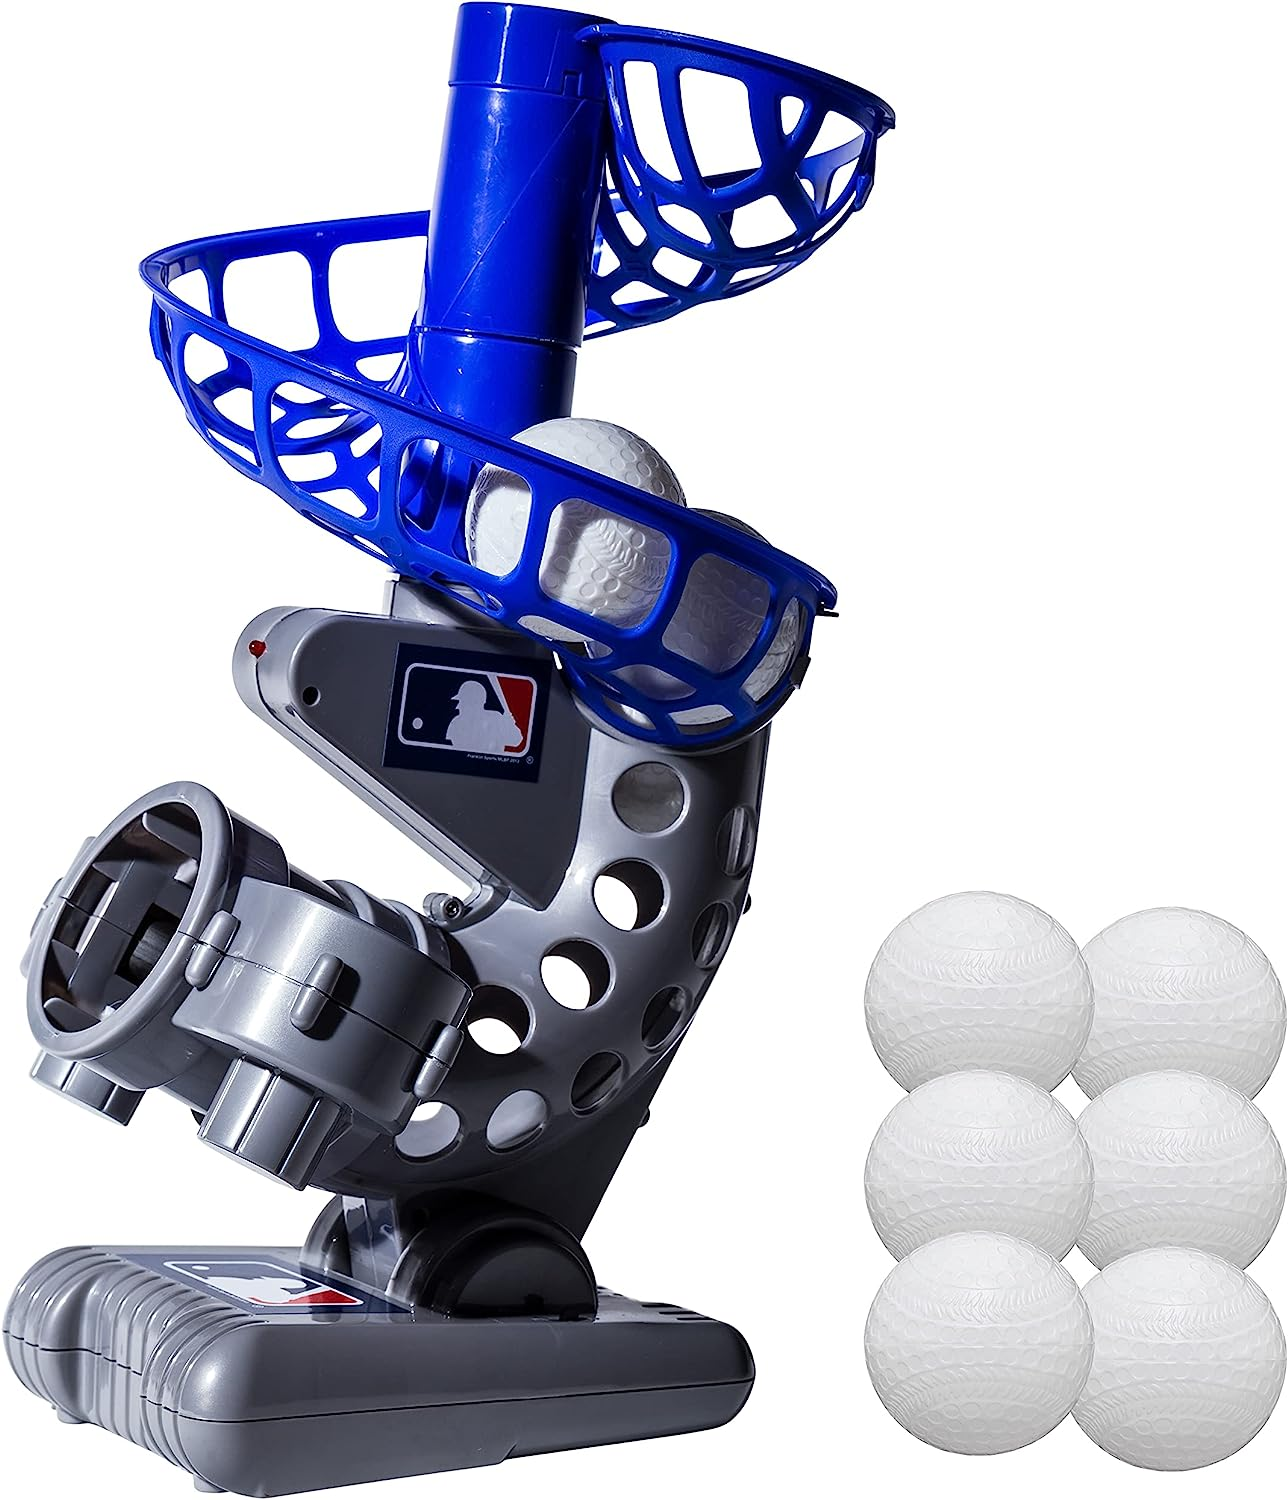 Franklin Sports MLB Electronic Baseball Pitching Machine w/ 6 Plastic Balls $23.99